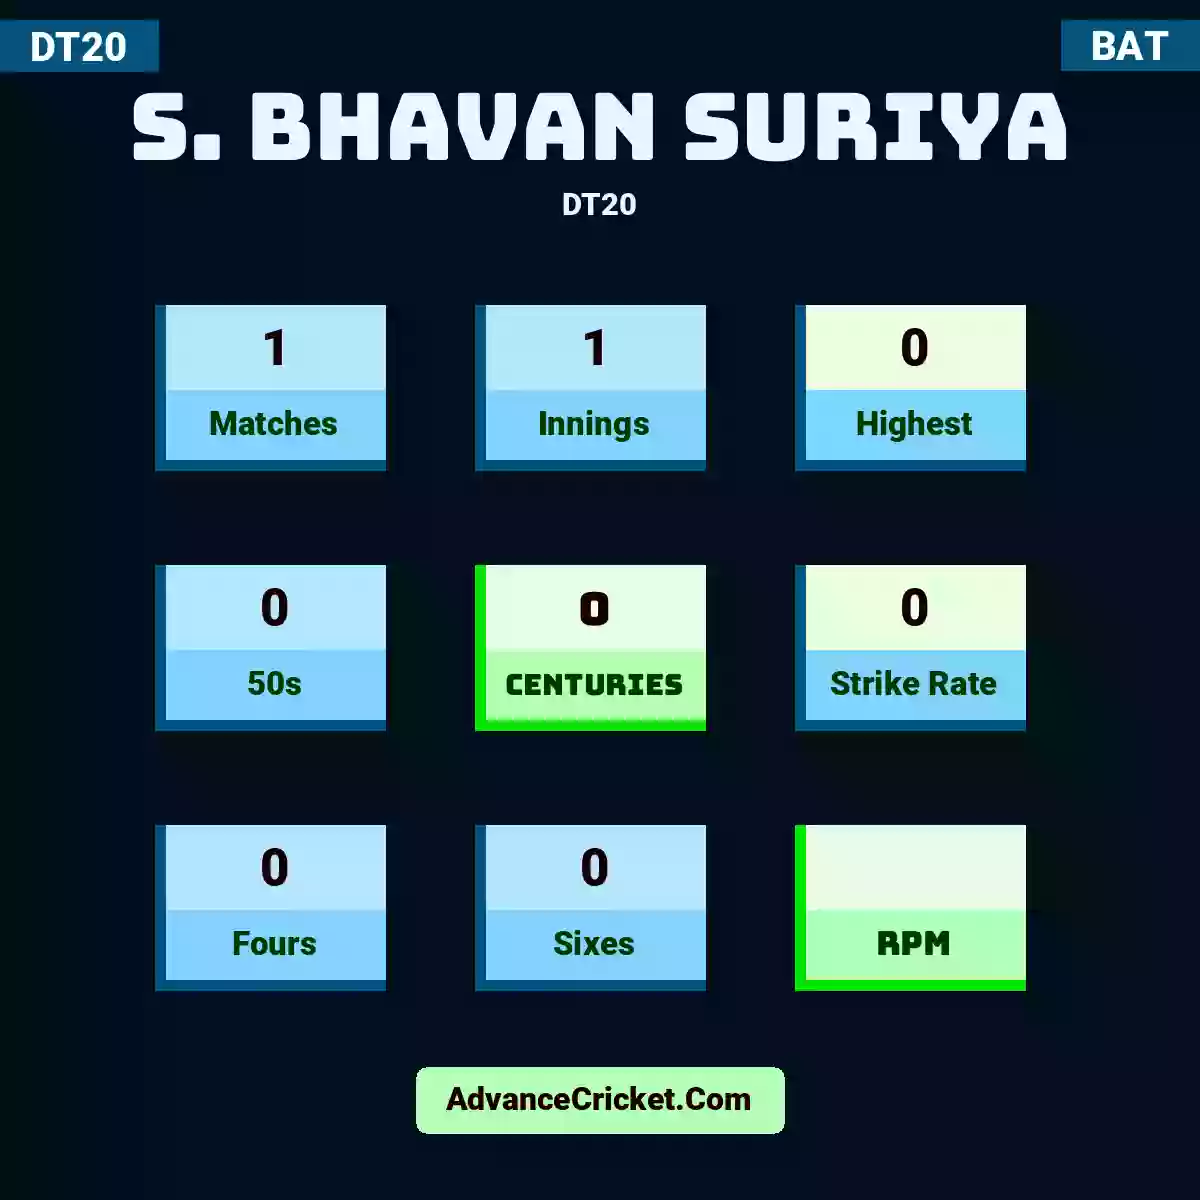 S. Bhavan Suriya DT20 , S. Bhavan Suriya played 1 matches, scored 0 runs as highest, 0 half-centuries, and 0 centuries, with a strike rate of 0. S.Bhavan.Suriya hit 0 fours and 0 sixes.